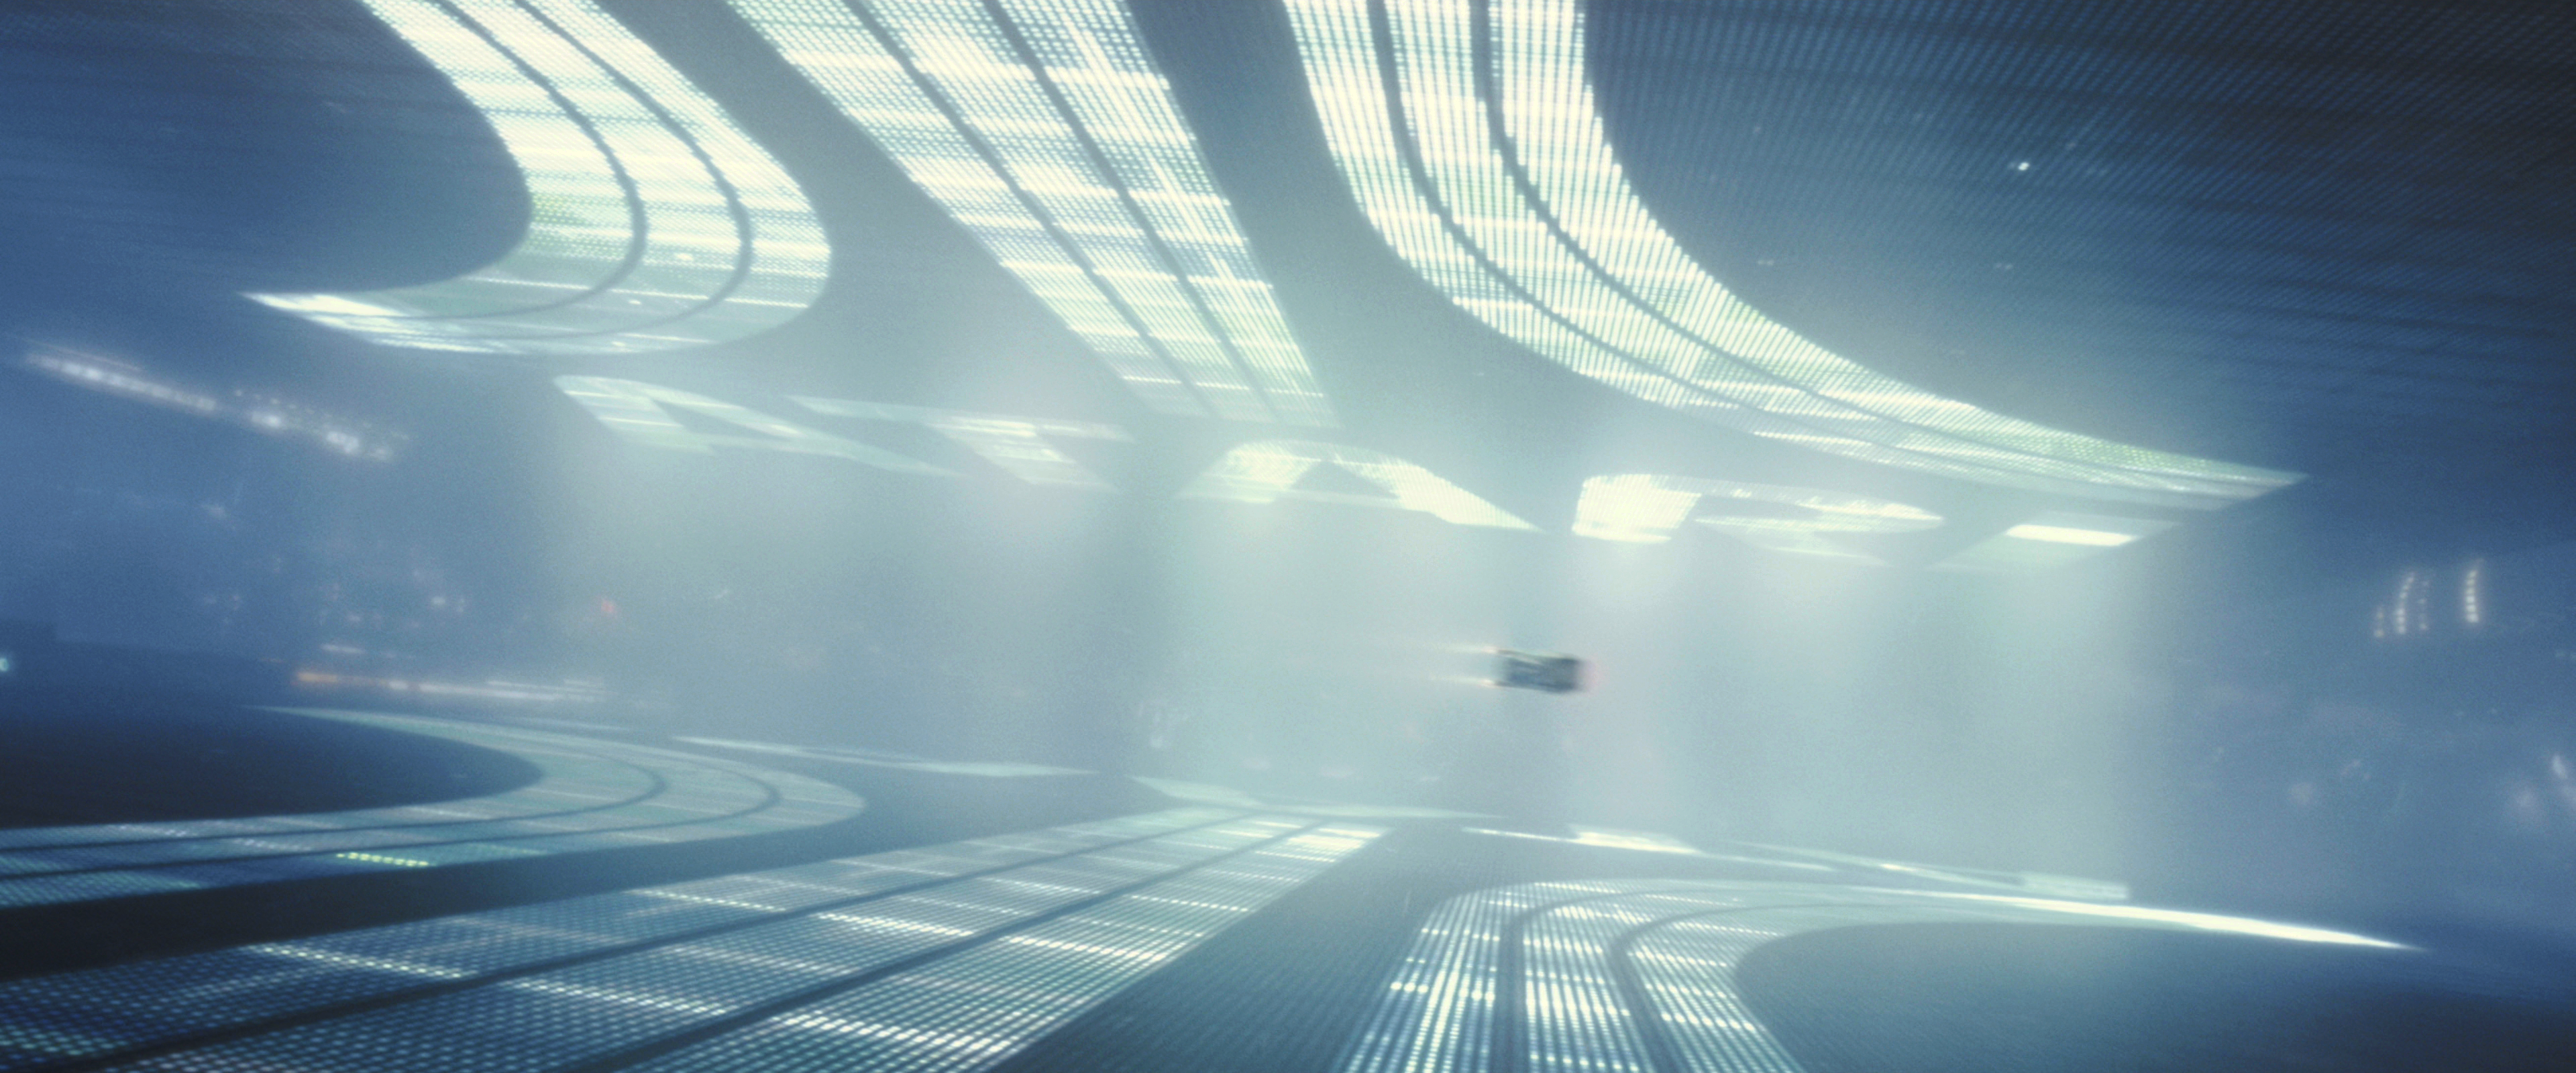 General 3840x1600 Blade Runner Blade Runner 2049 cyberpunk movies Atari futuristic city